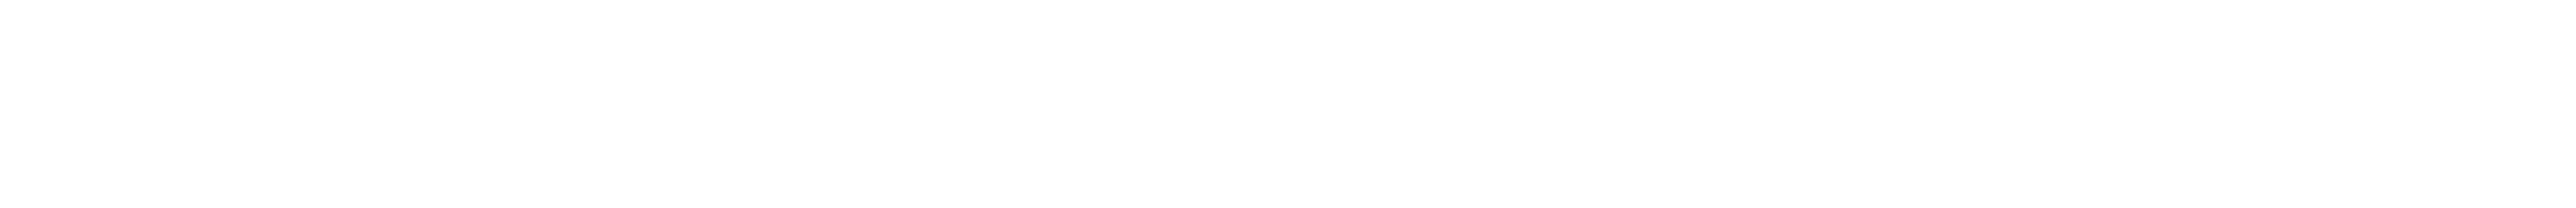 ECARPETGALLERY logo